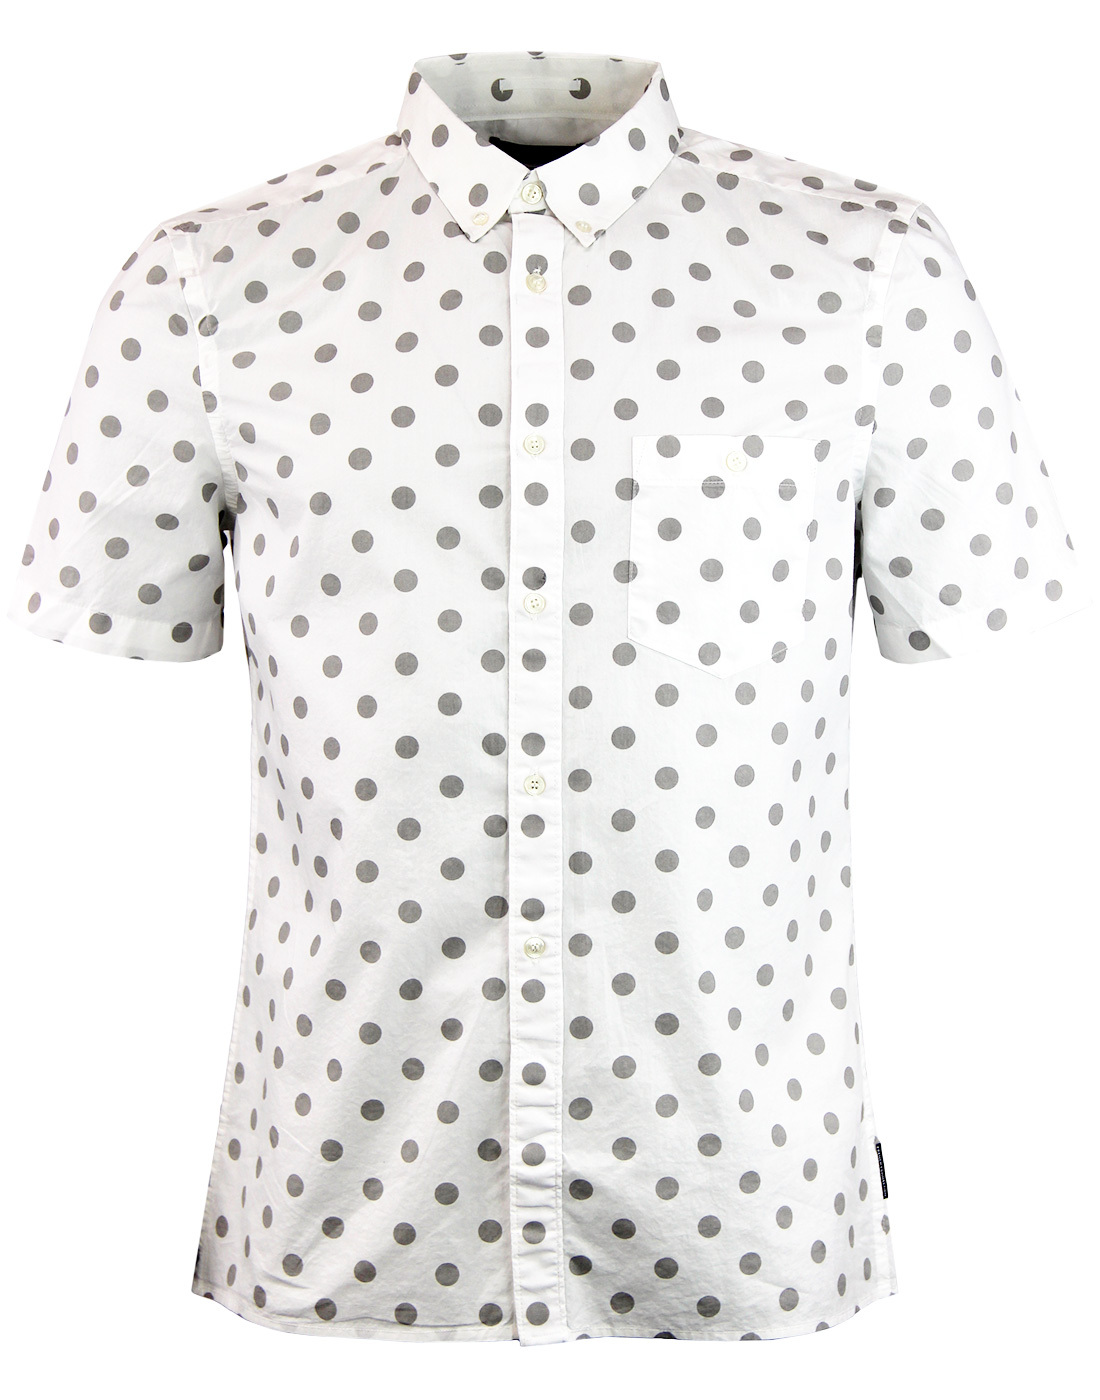 FRENCH CONNECTION Mod 60s Big Polka Dot Shirt